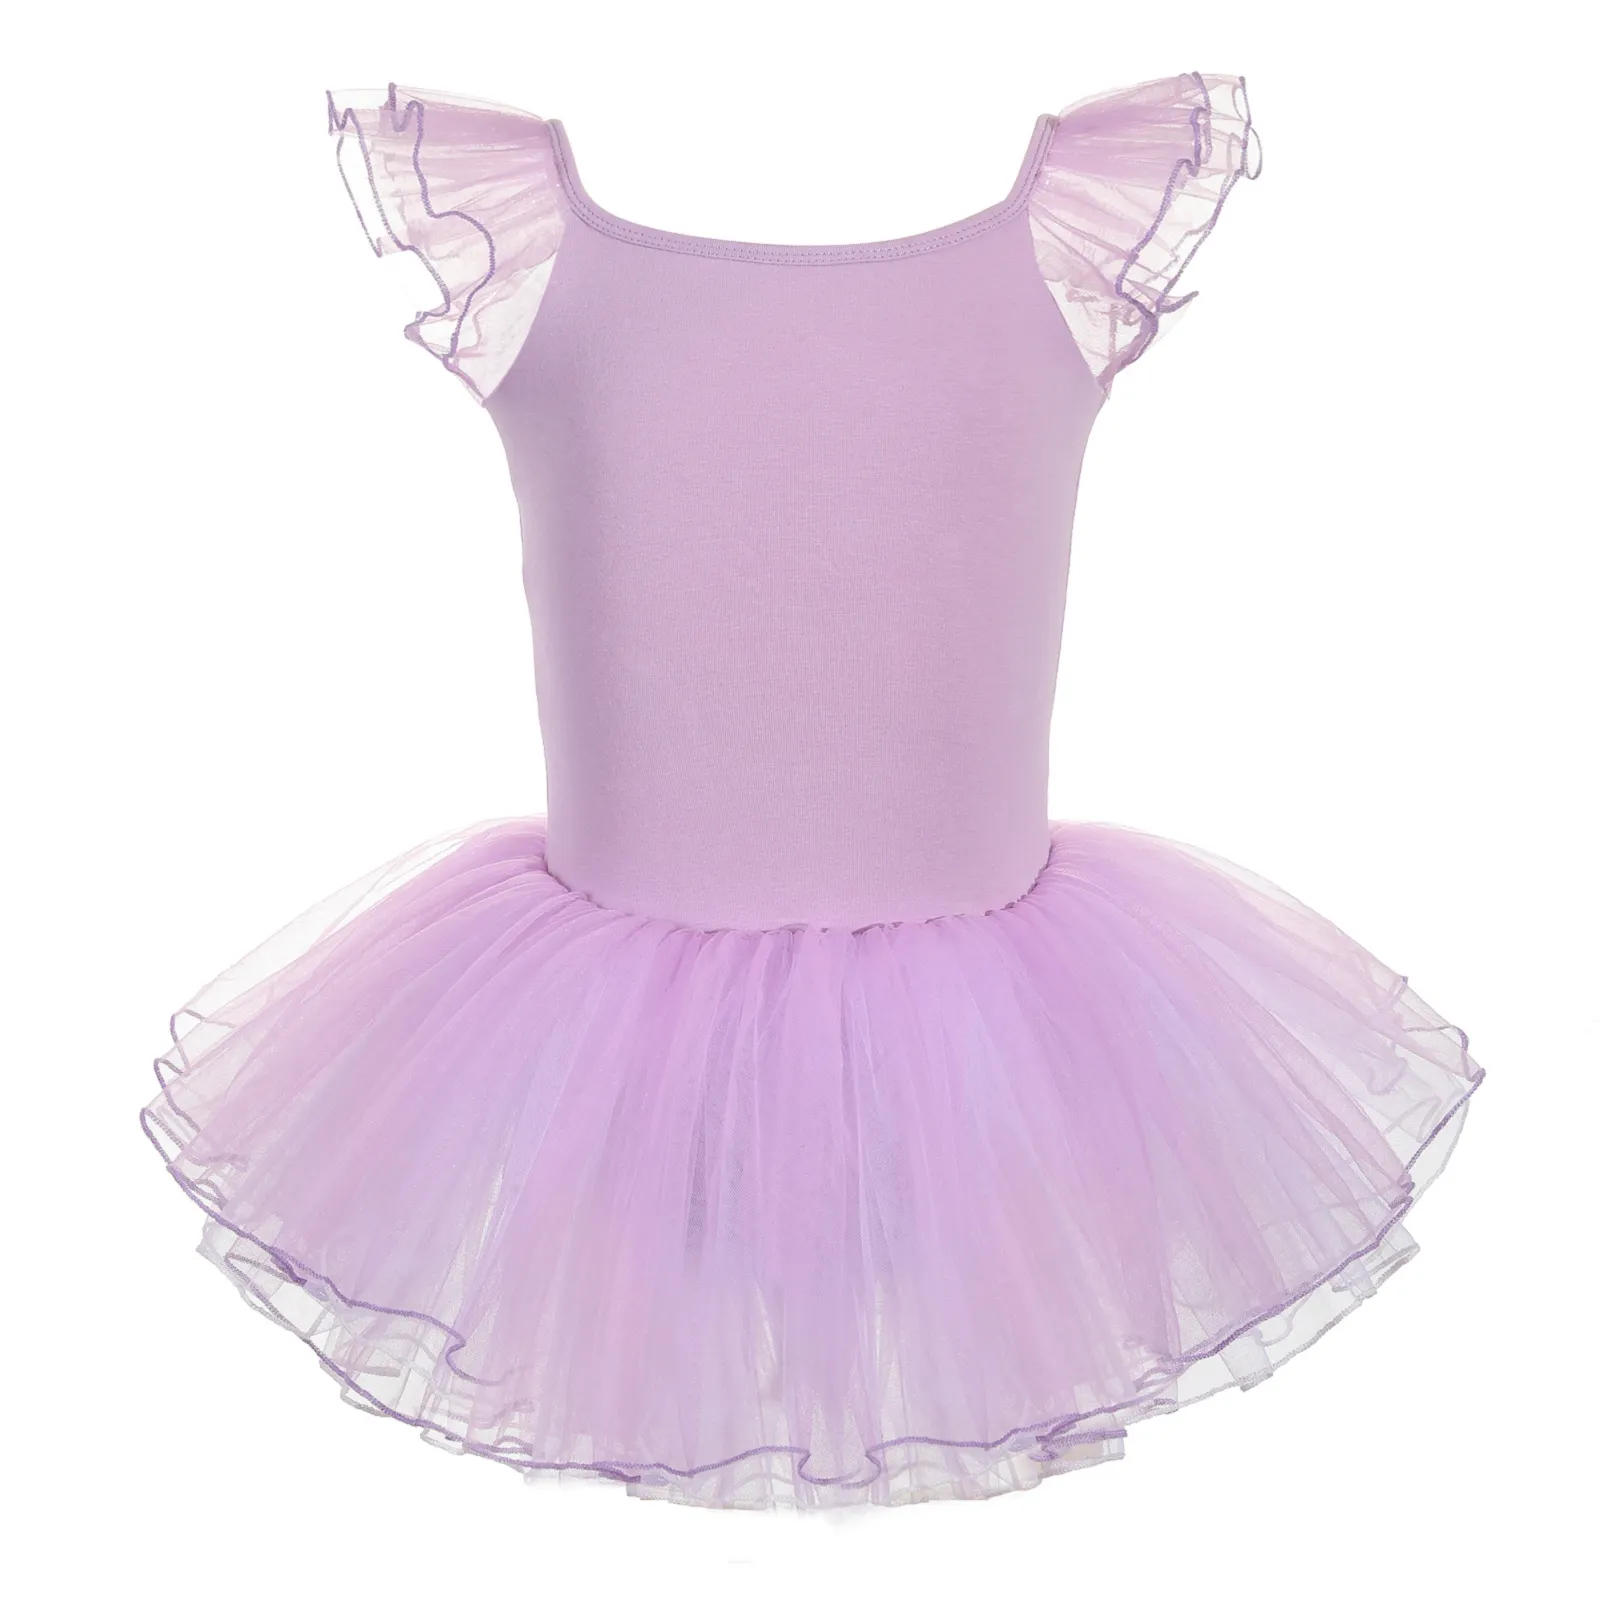 Y-04 New Girls' Ballet Skirt Half Sleeve Ballet Dress Puffy Skirt Dance Training Clothes